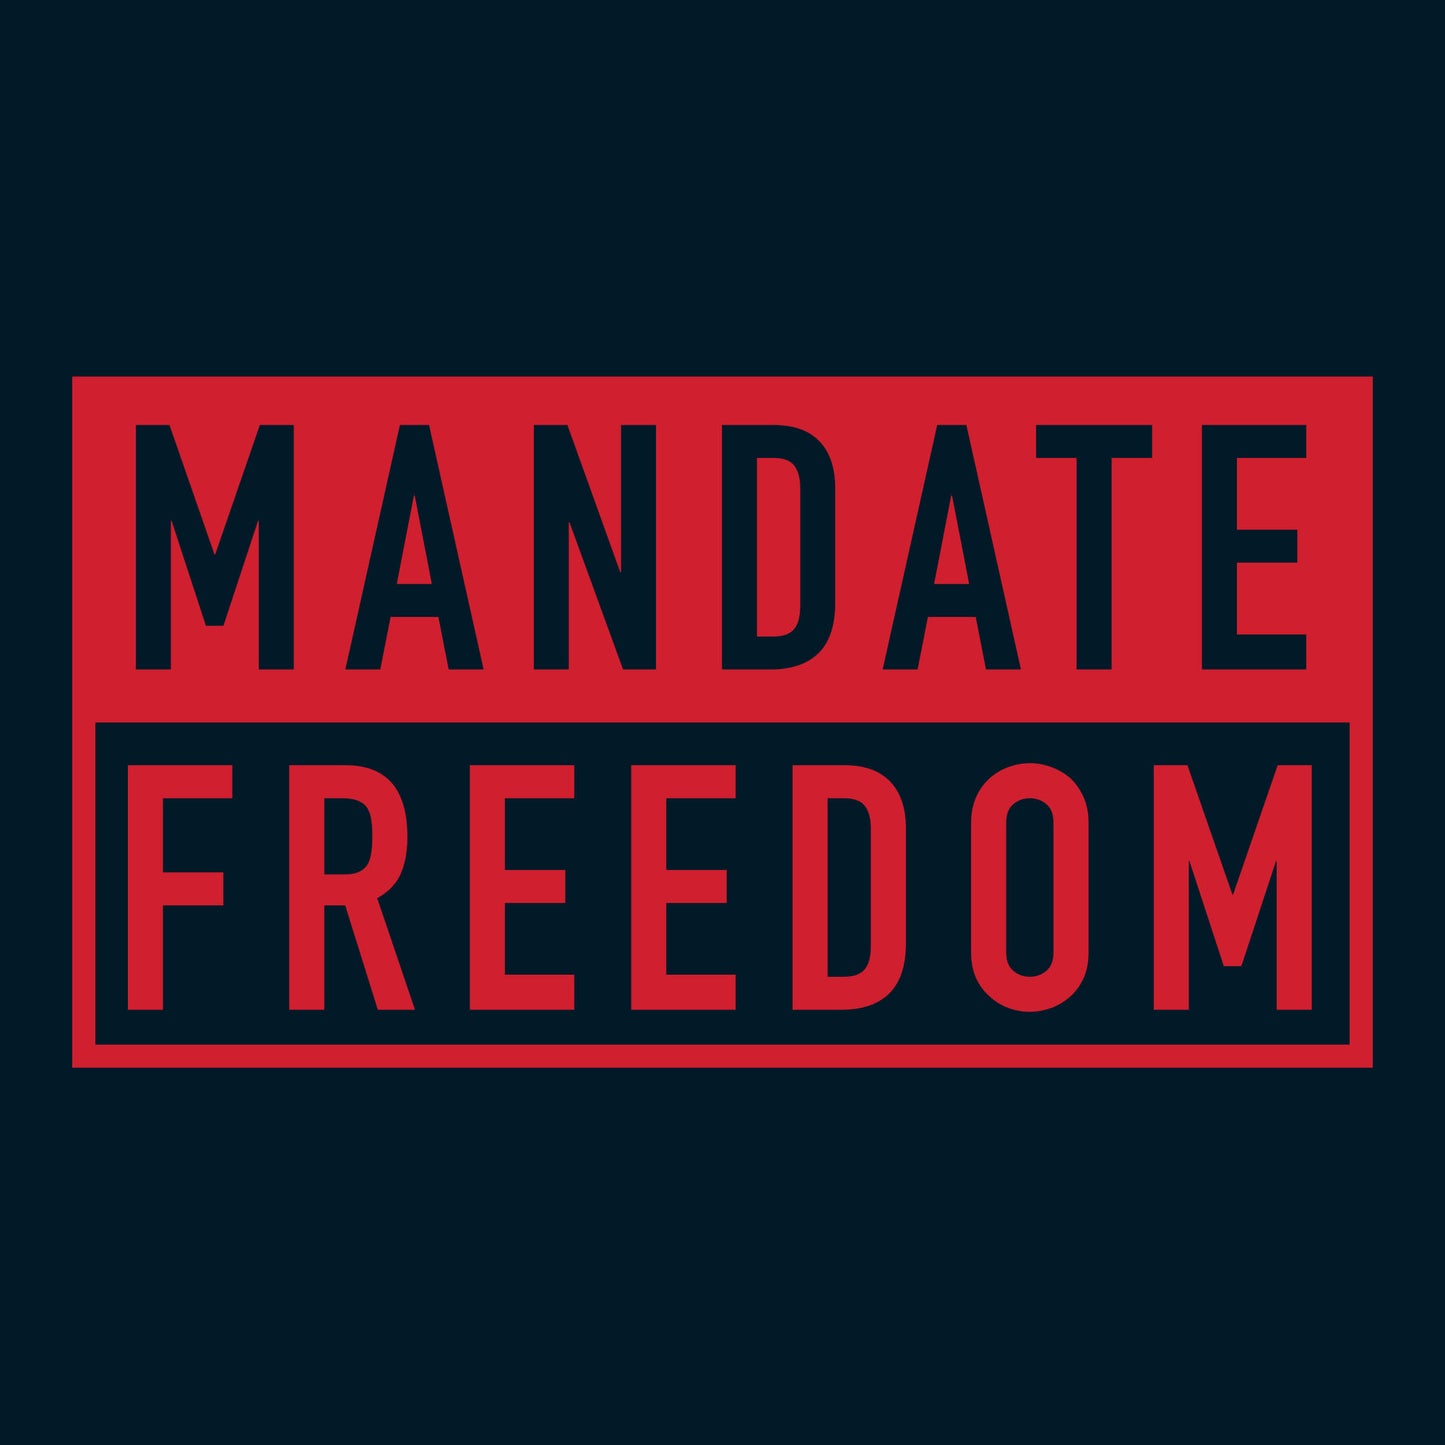 Mandate Freedom Graphic | Grunt Style 